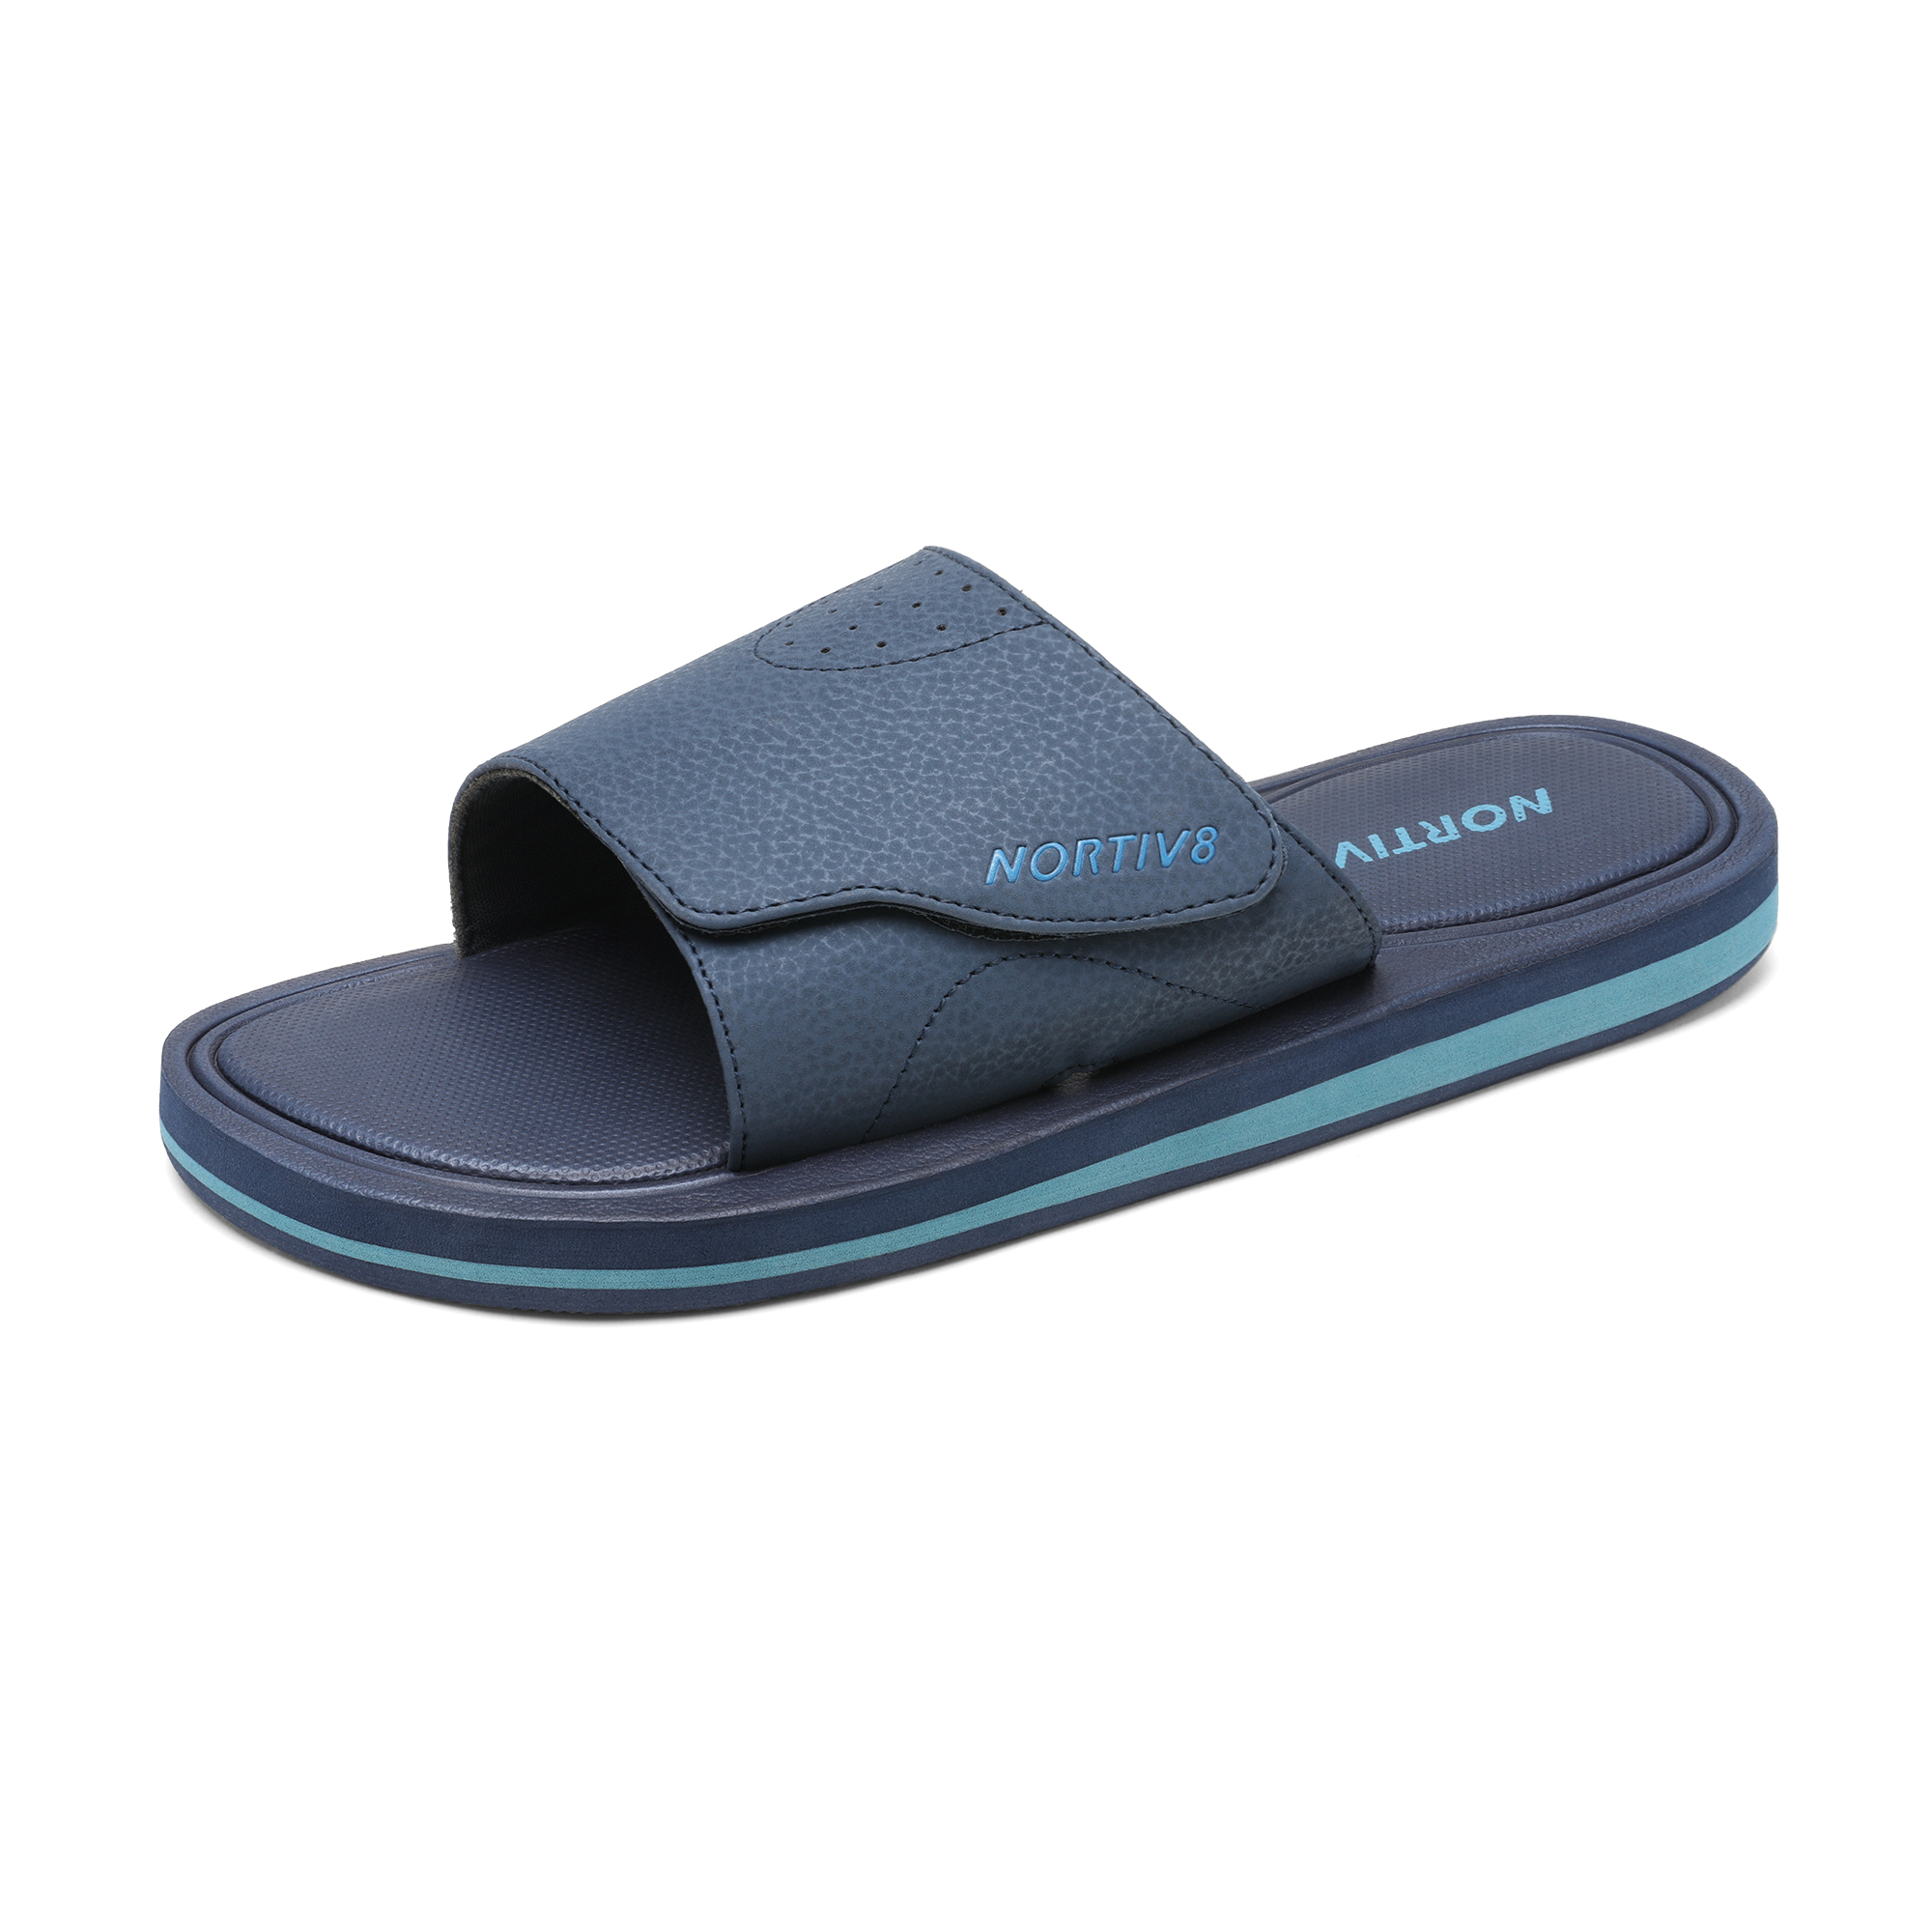 Nortiv8 Men's Memory Foam Adjustable Slide Sandals Comfort Lightweight Summer Beach Sandals Shoes FUSION NAVY Size 15 - image 1 of 5